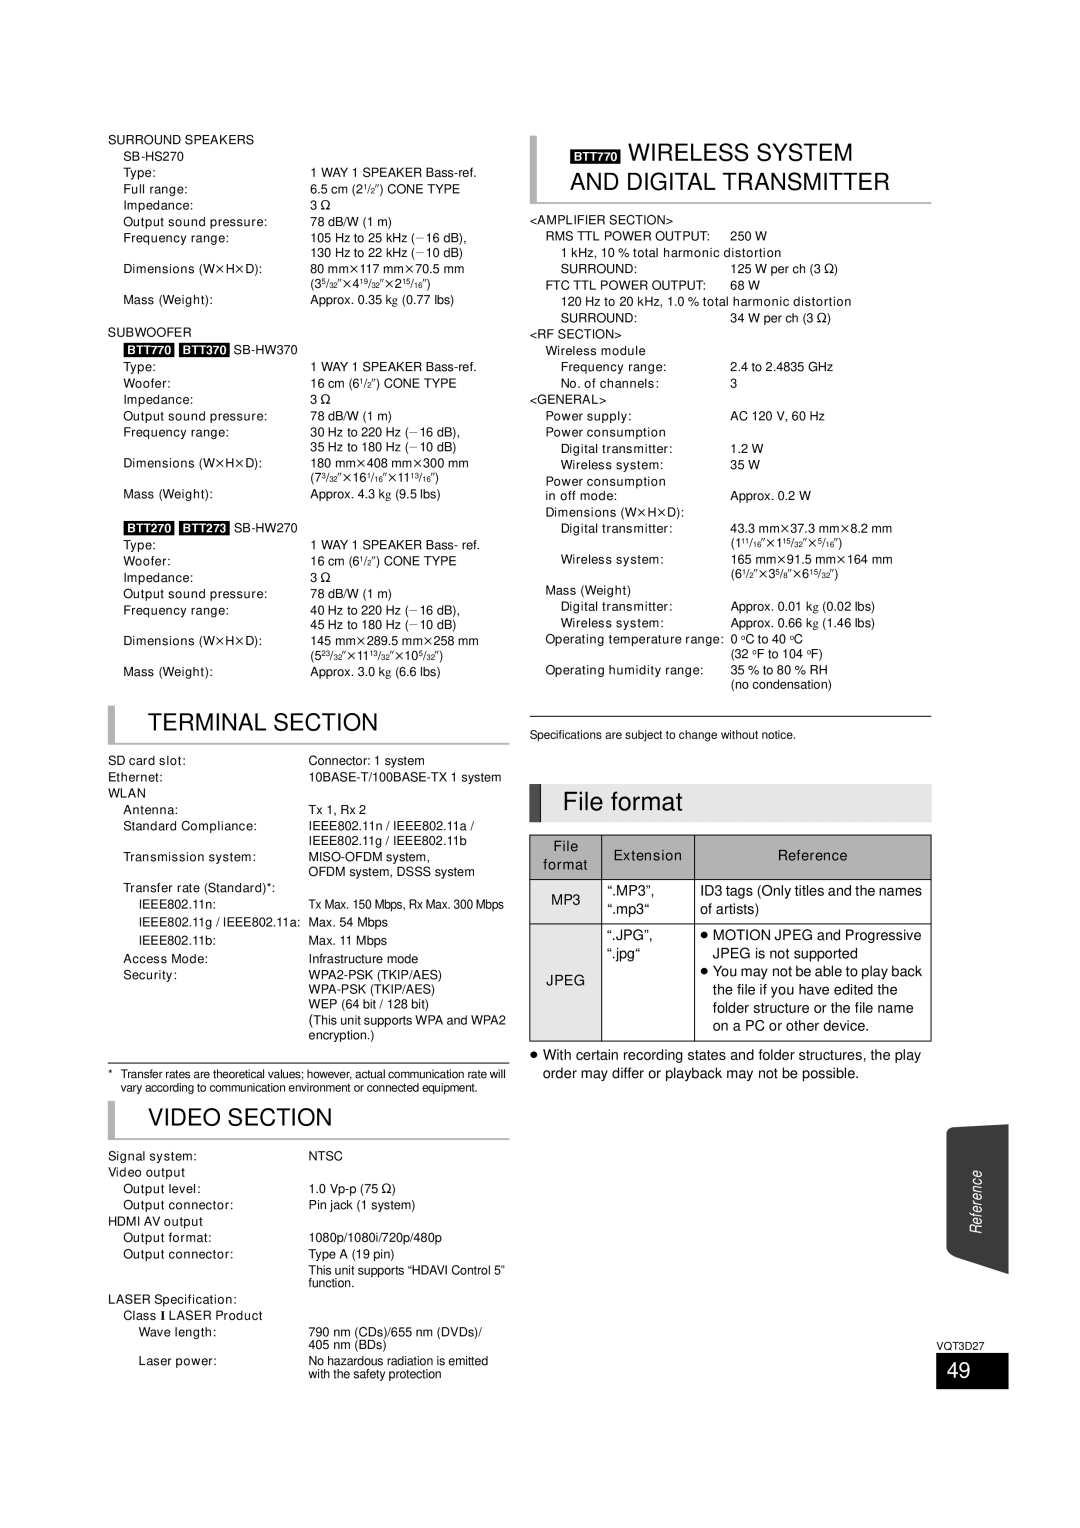 Panasonic SC-BTT770, BTT273 File format, Terminal Section, Video Section, BTT770 WIRELESS SYSTEM AND DIGITAL TRANSMITTER 